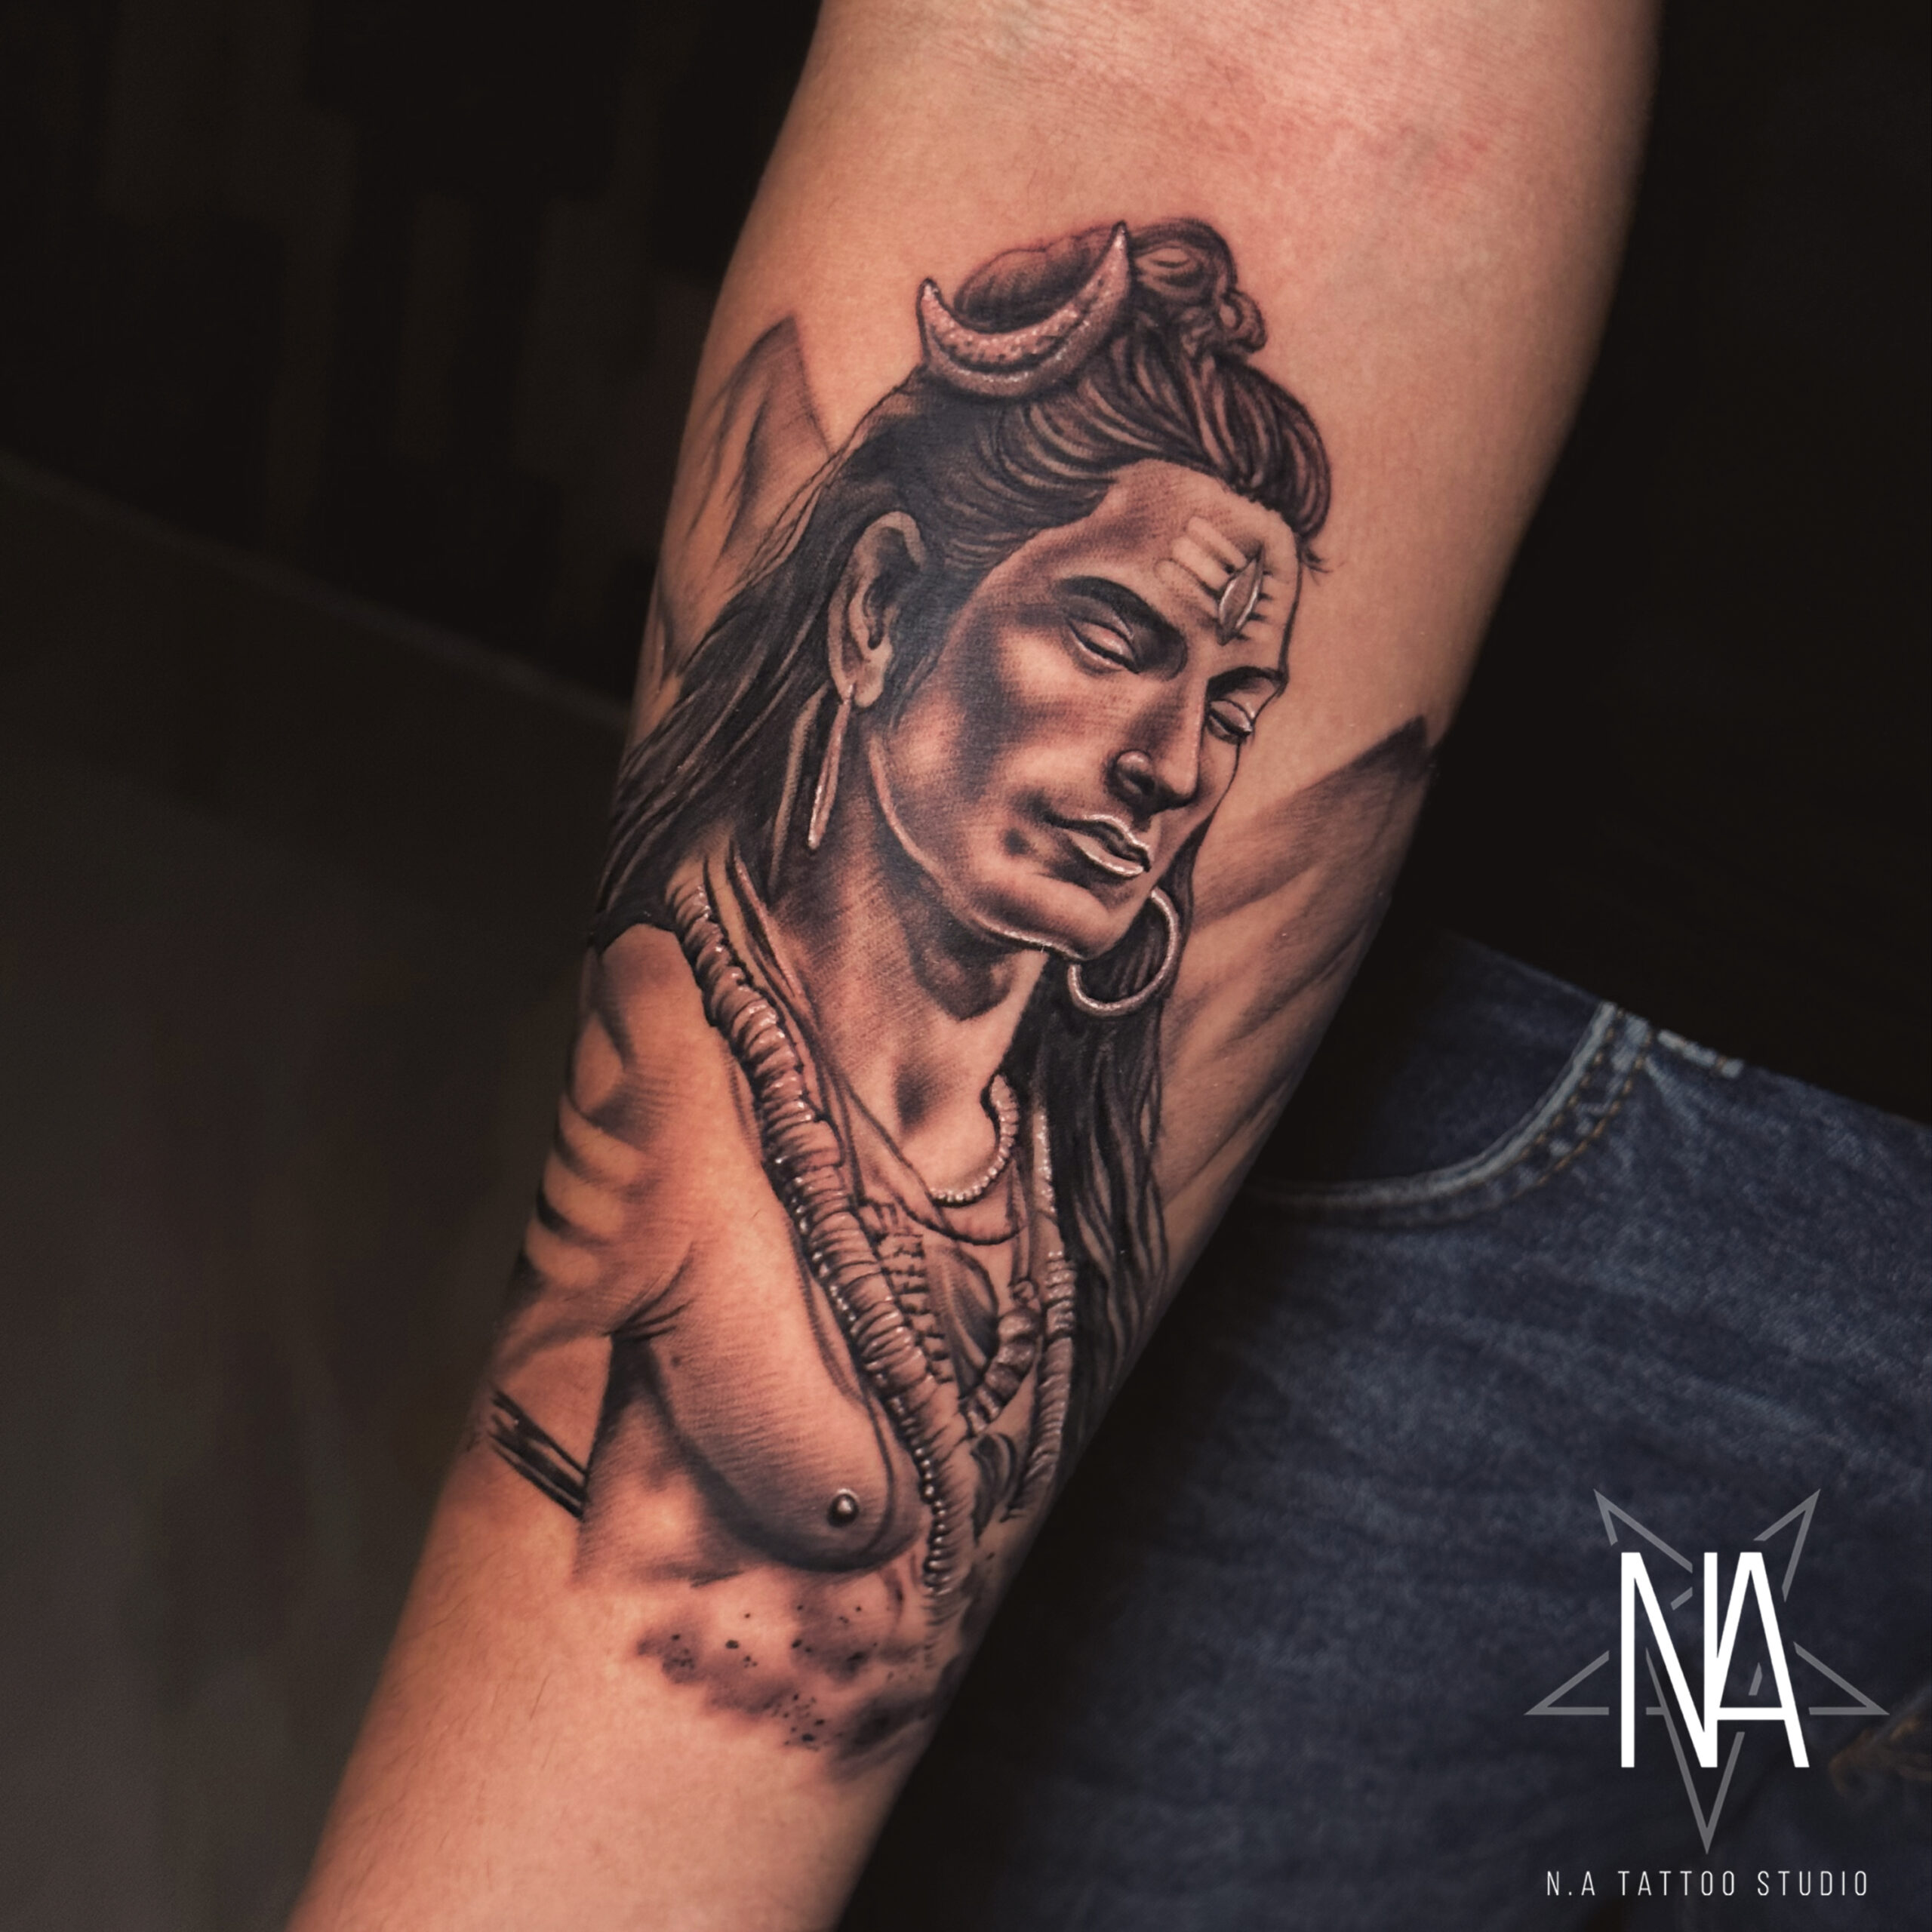 Shiva Half Sleeve Tattoo at Rs 599/square inch in Bengaluru | ID:  24446455988